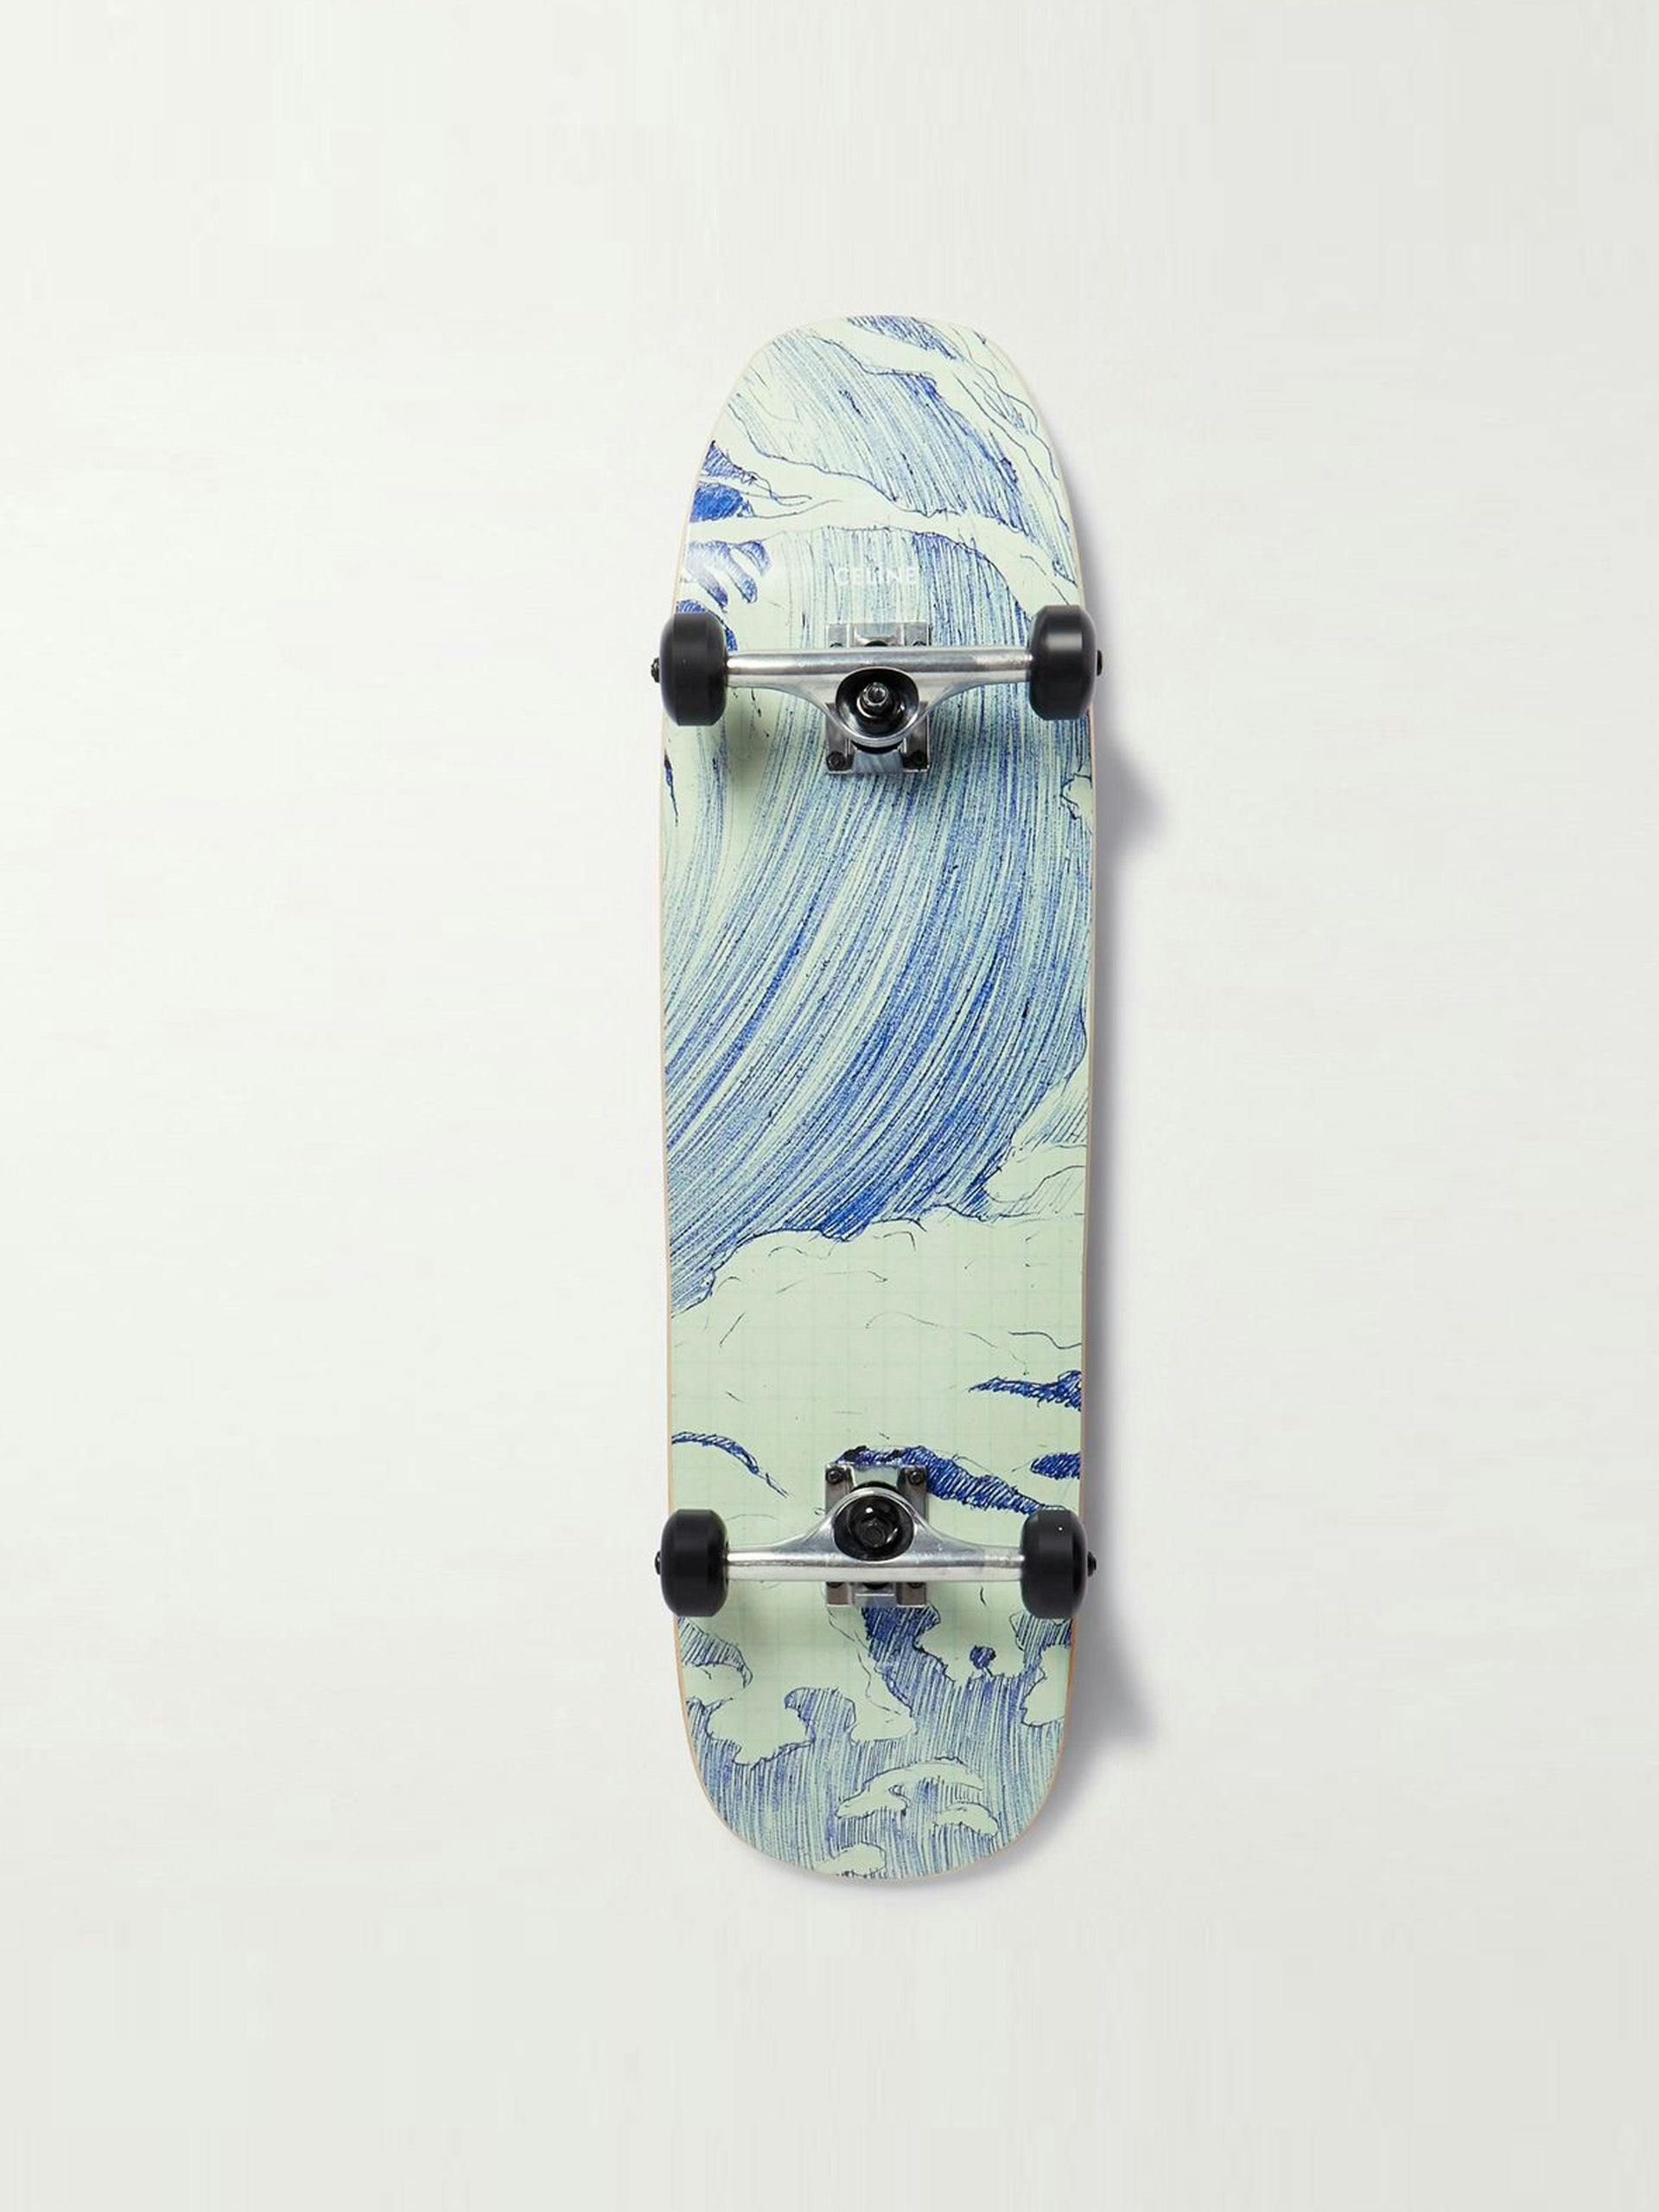 Printed wooden skateboard